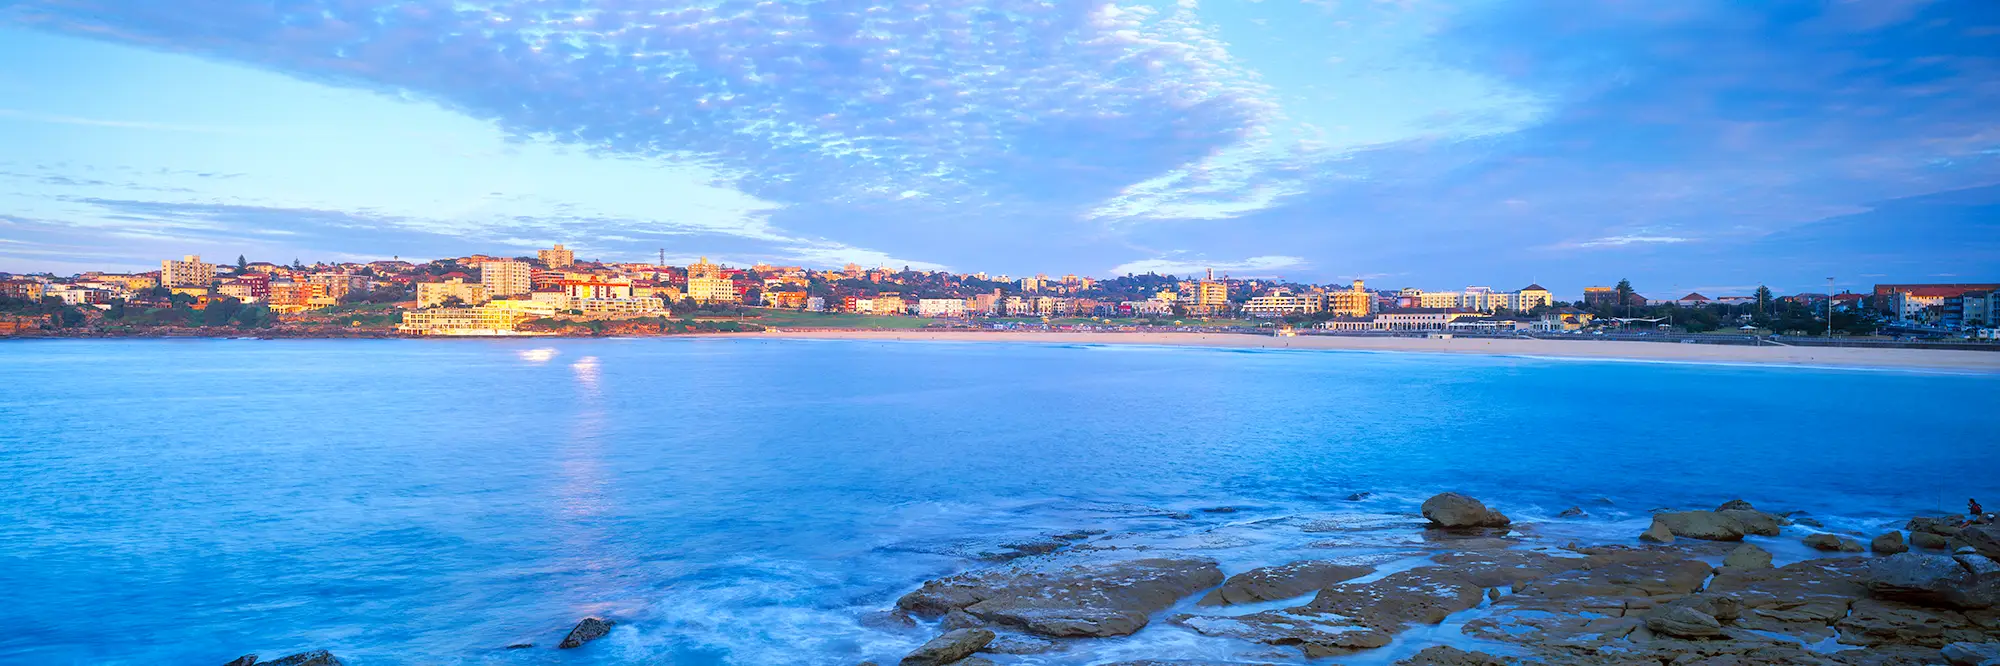 Bondi Beach Panoramic Landscape Photo Prints